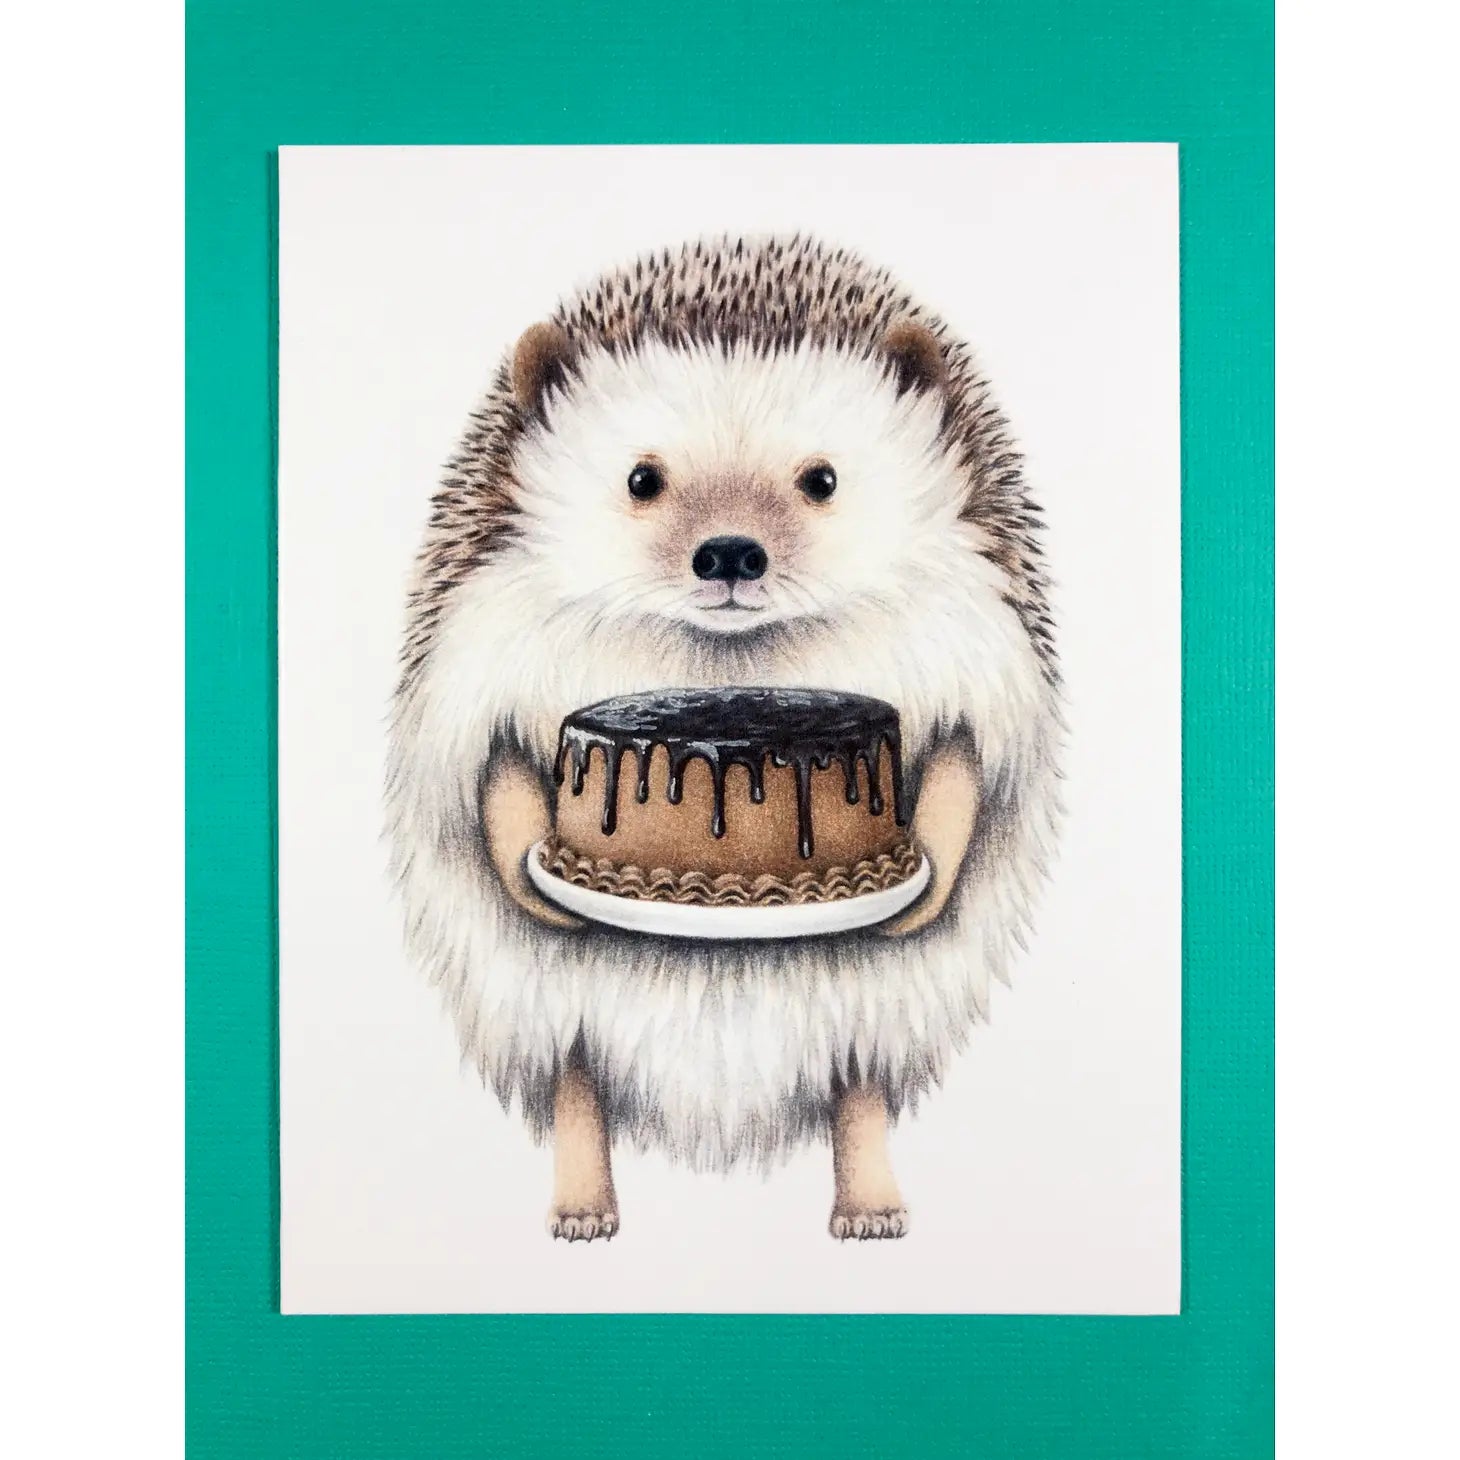 Hedgehog With Cake - Greeting Card